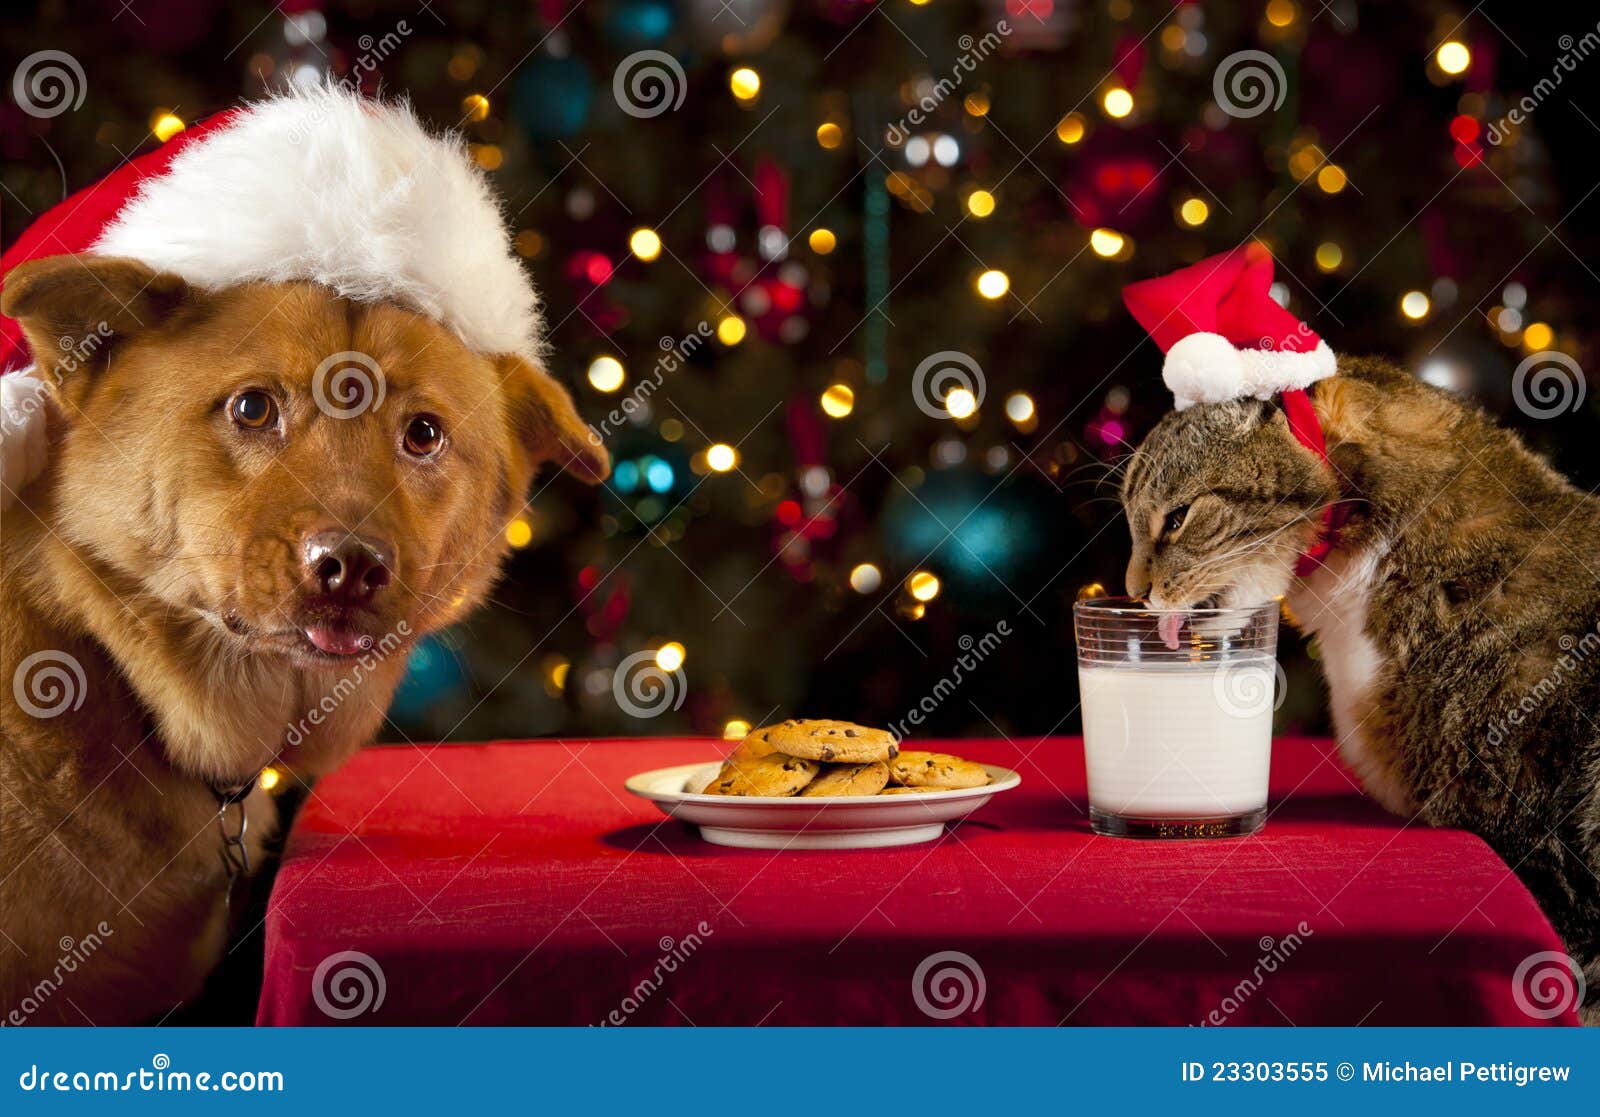 cat-dog-taking-over-santa-s-cookies-milk-23303555.jpg